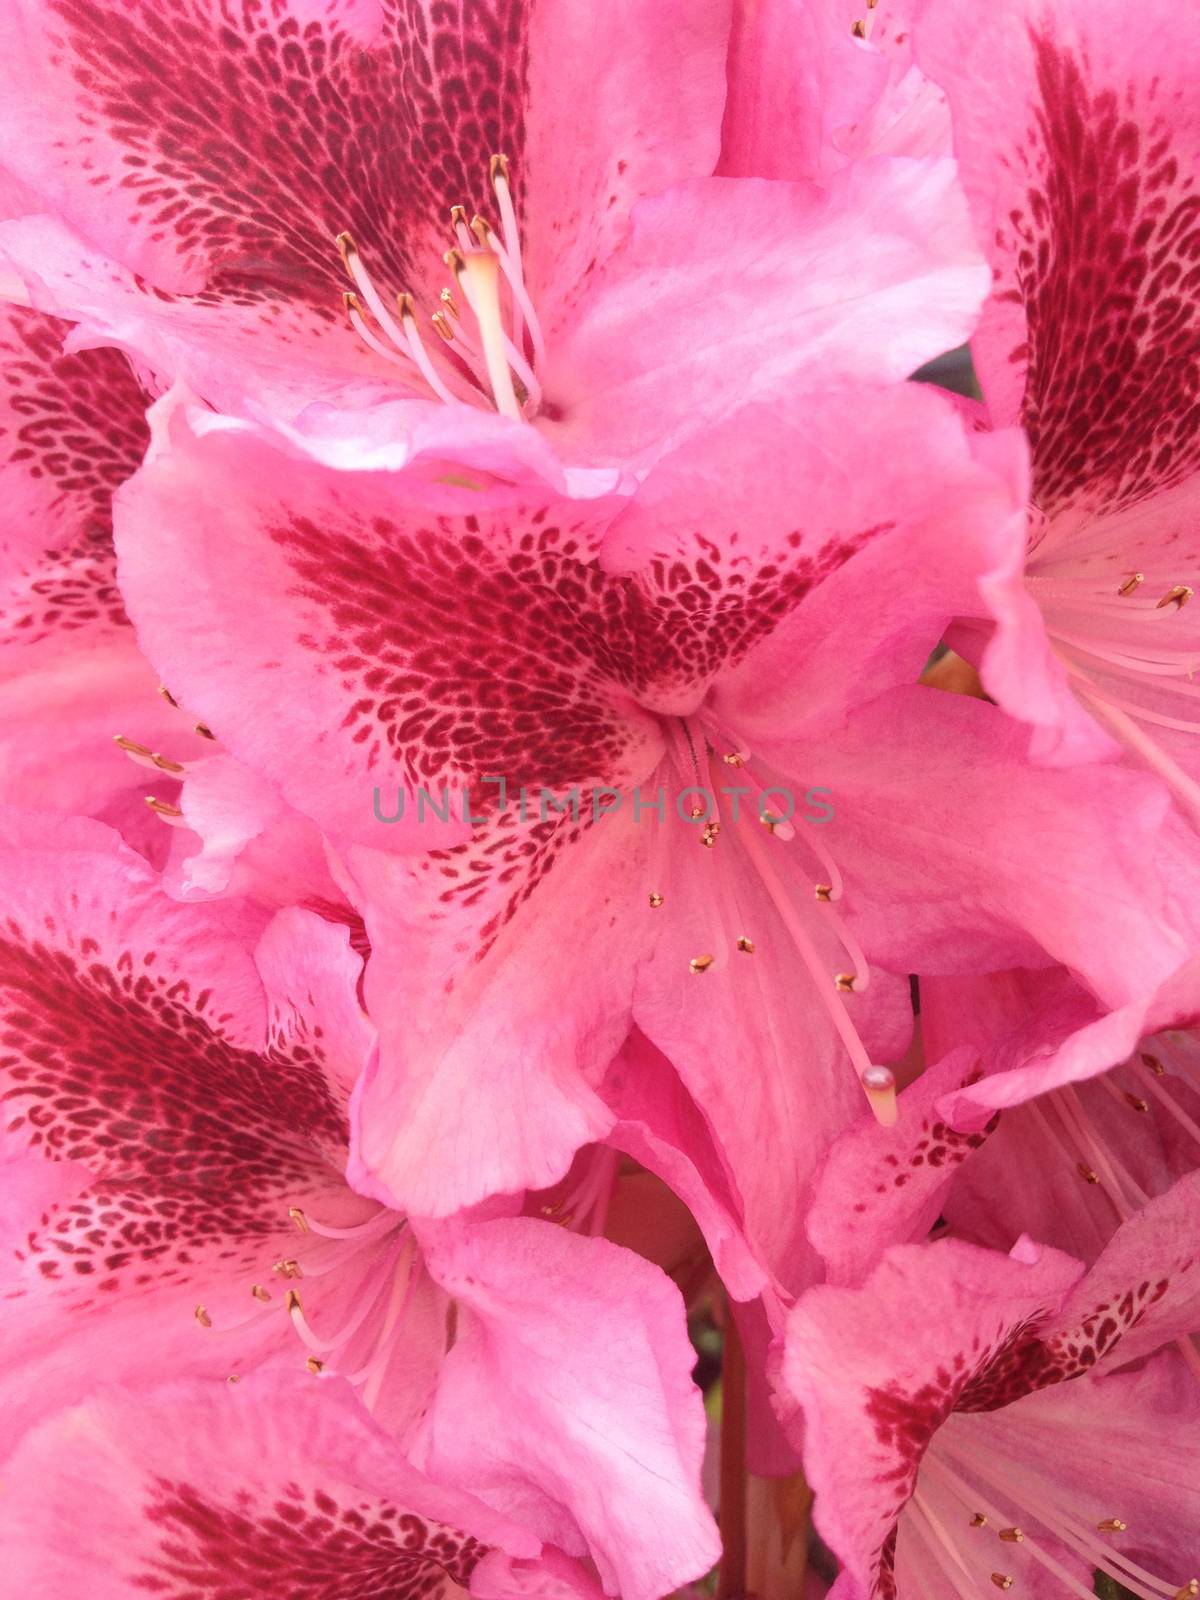 Light pink rhododendron flowers with darker pink leopard spot pattern